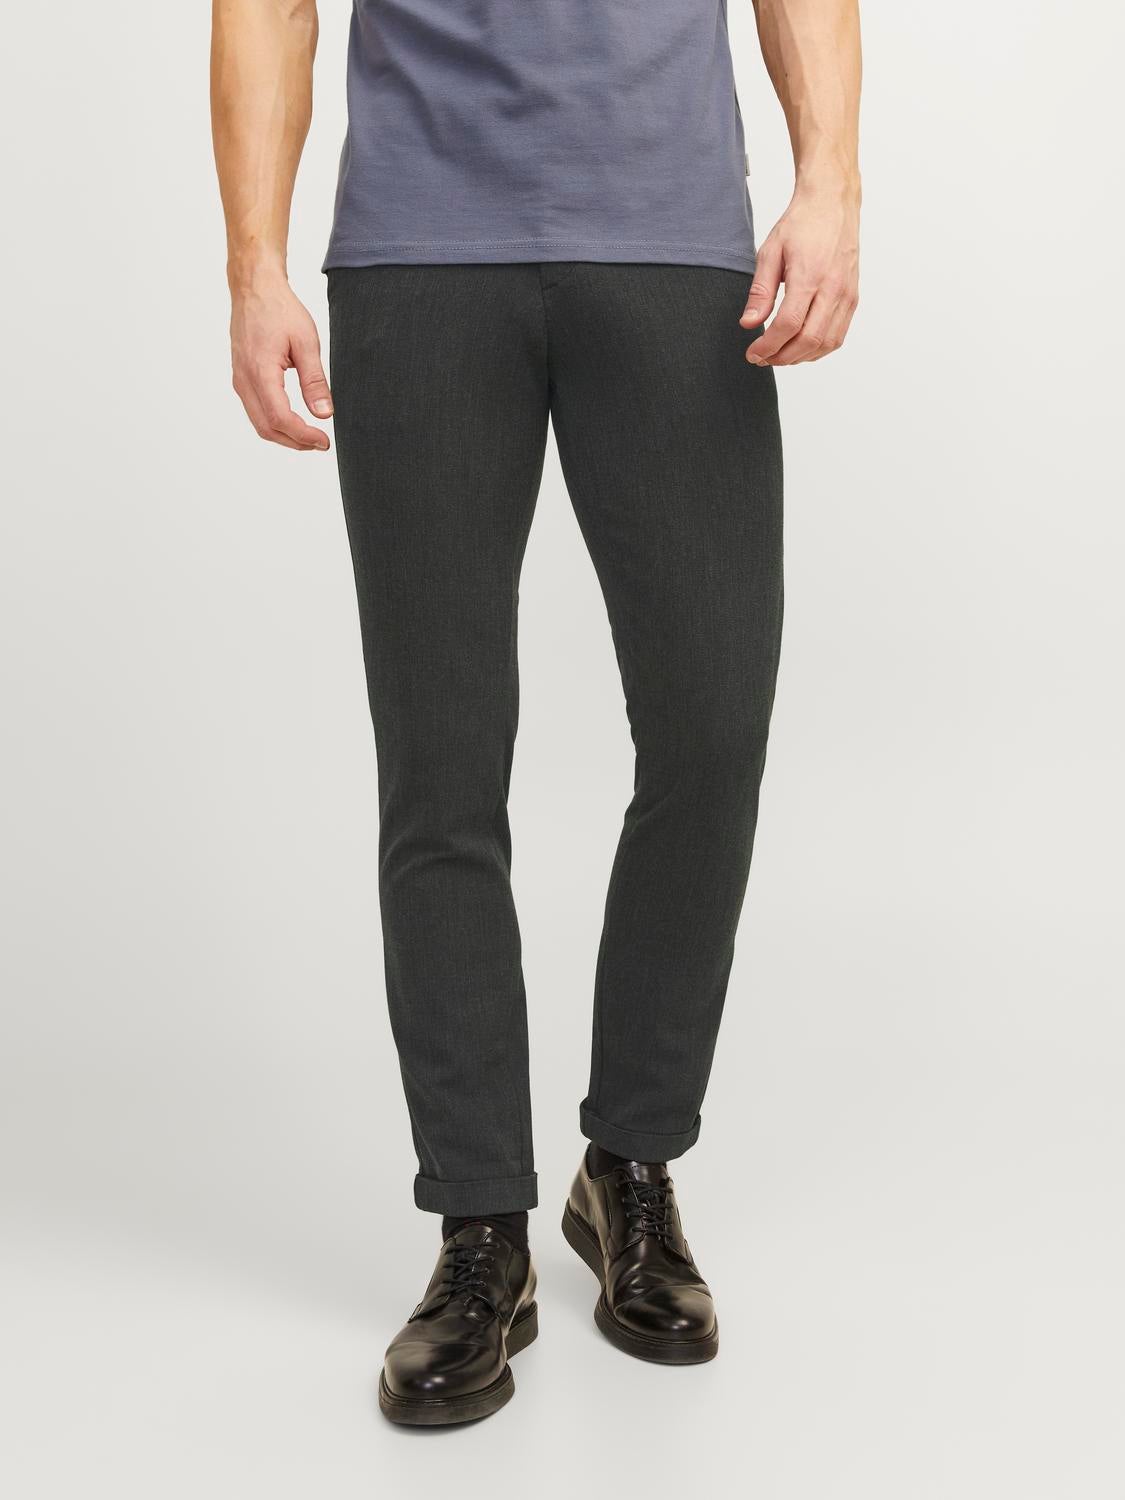 Buy Old Grey Men's Grey Slim Fit Trousers Online at Bewakoof